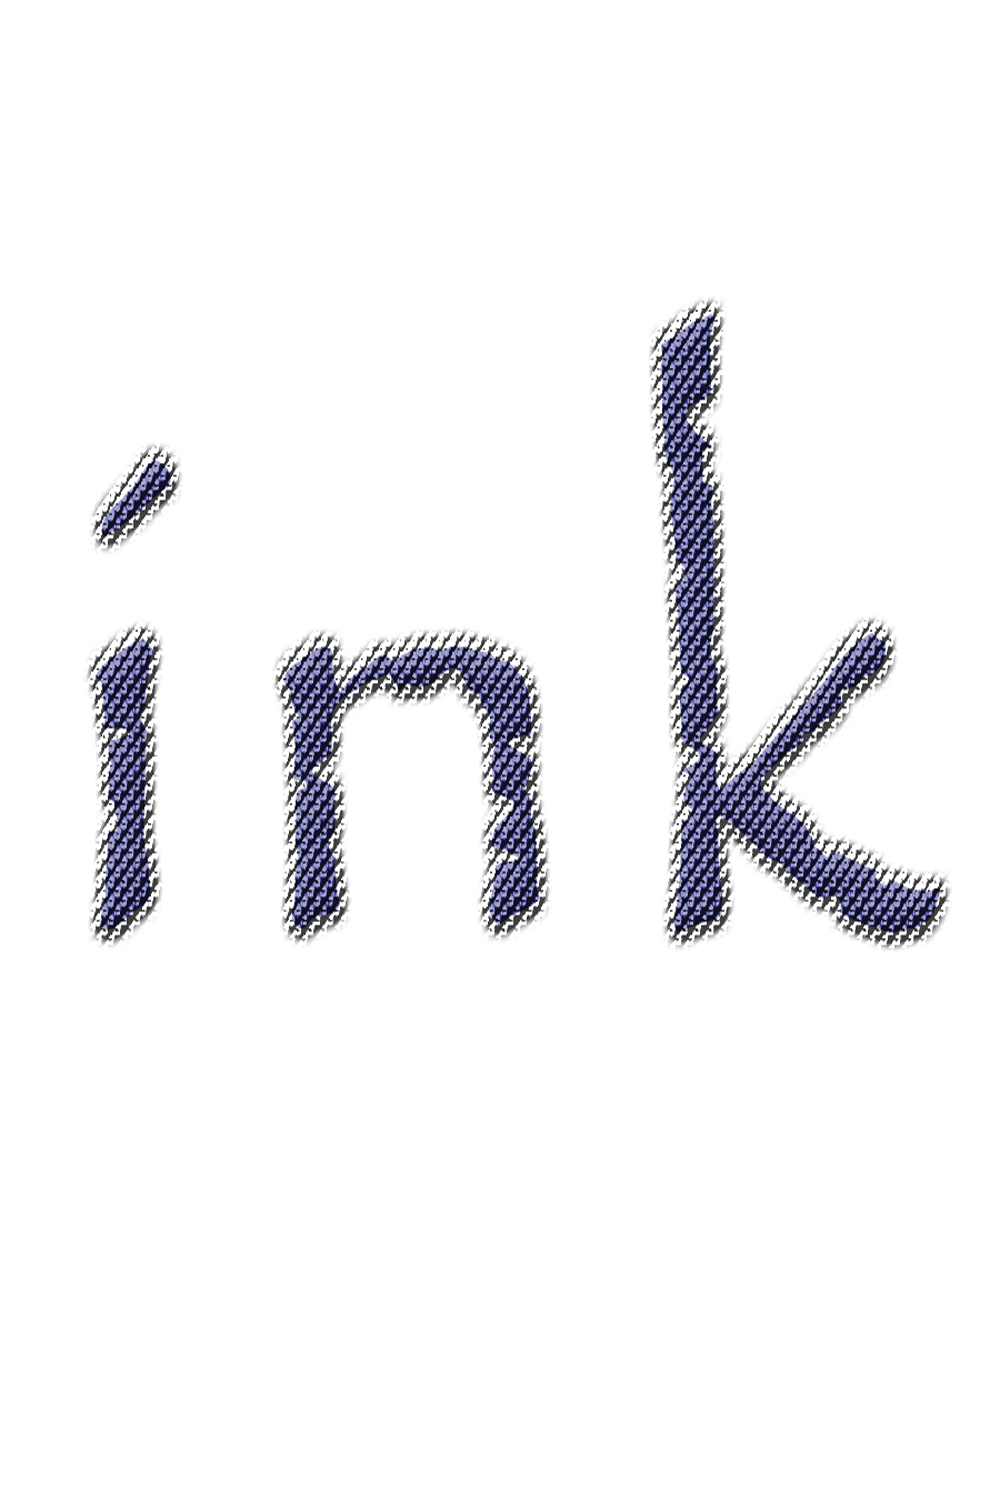 Ink TShirt Print Design pinterest preview image.